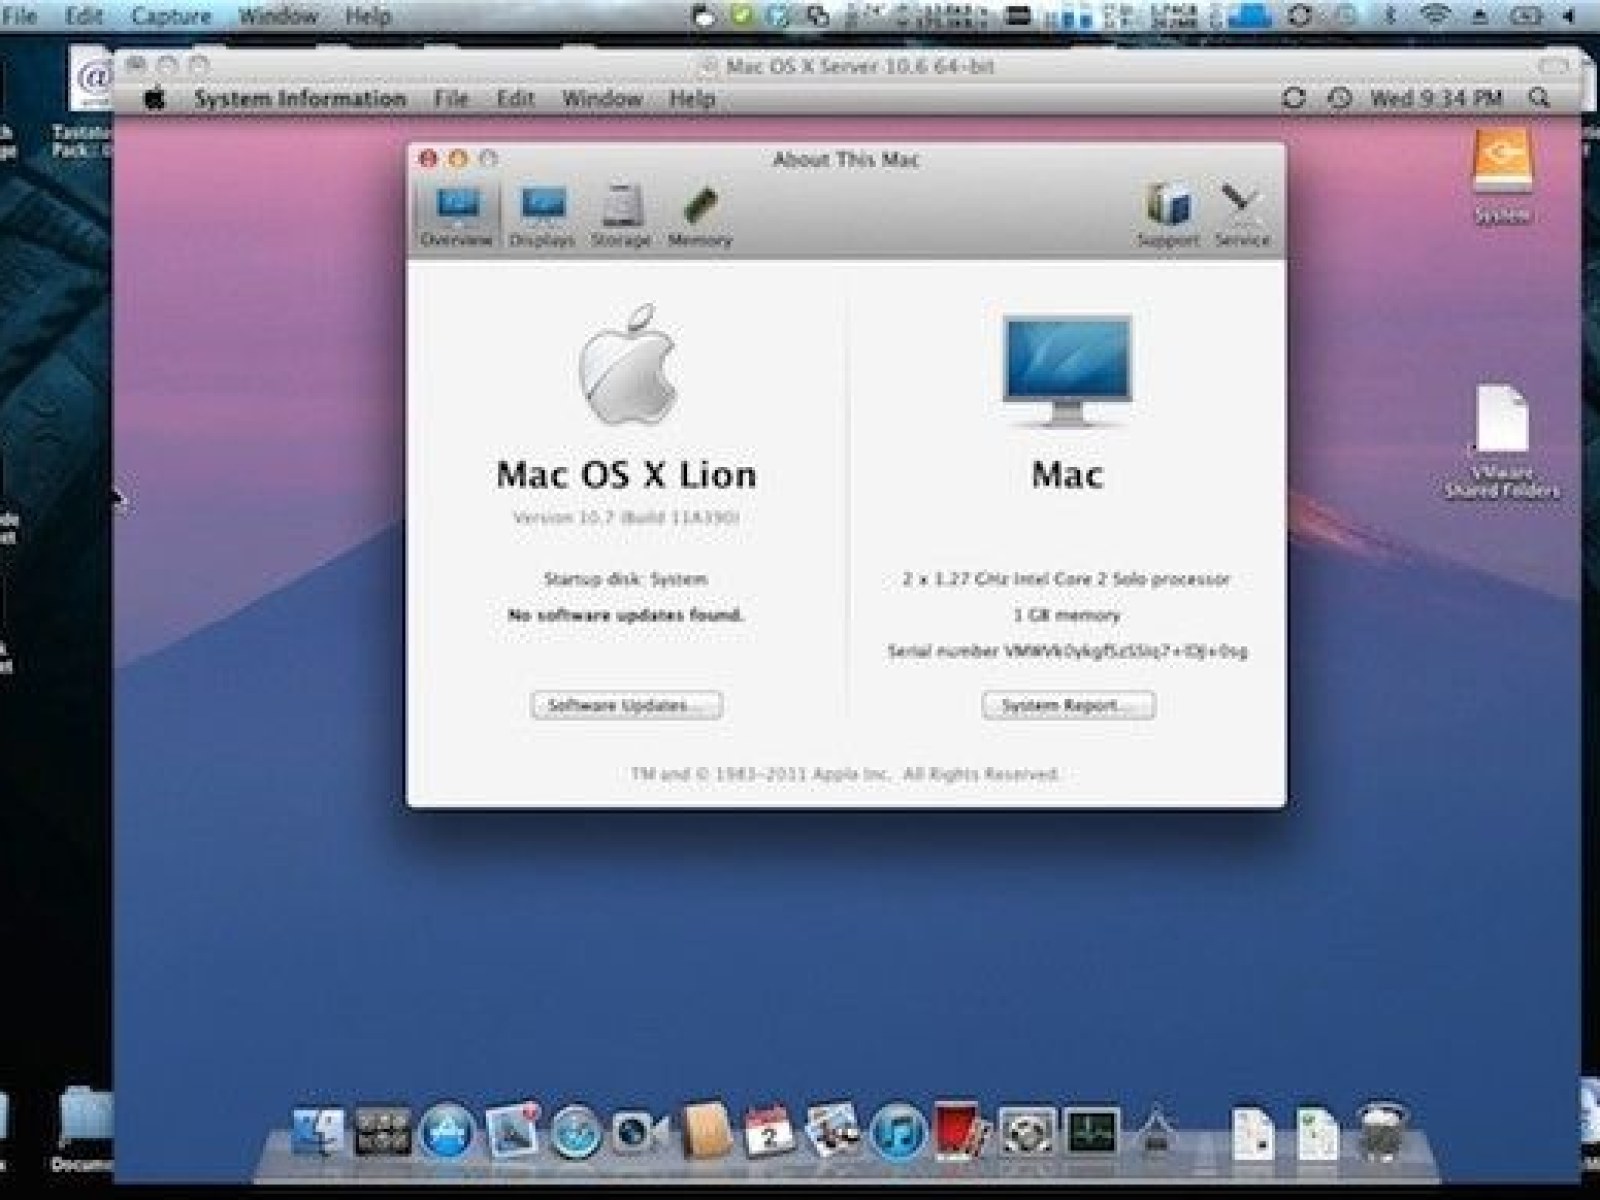 Macos support. Os x 10.7 Lion. Mac os 10.7. Mac os x 10.7 Lion. Mac os x 10.7 4.